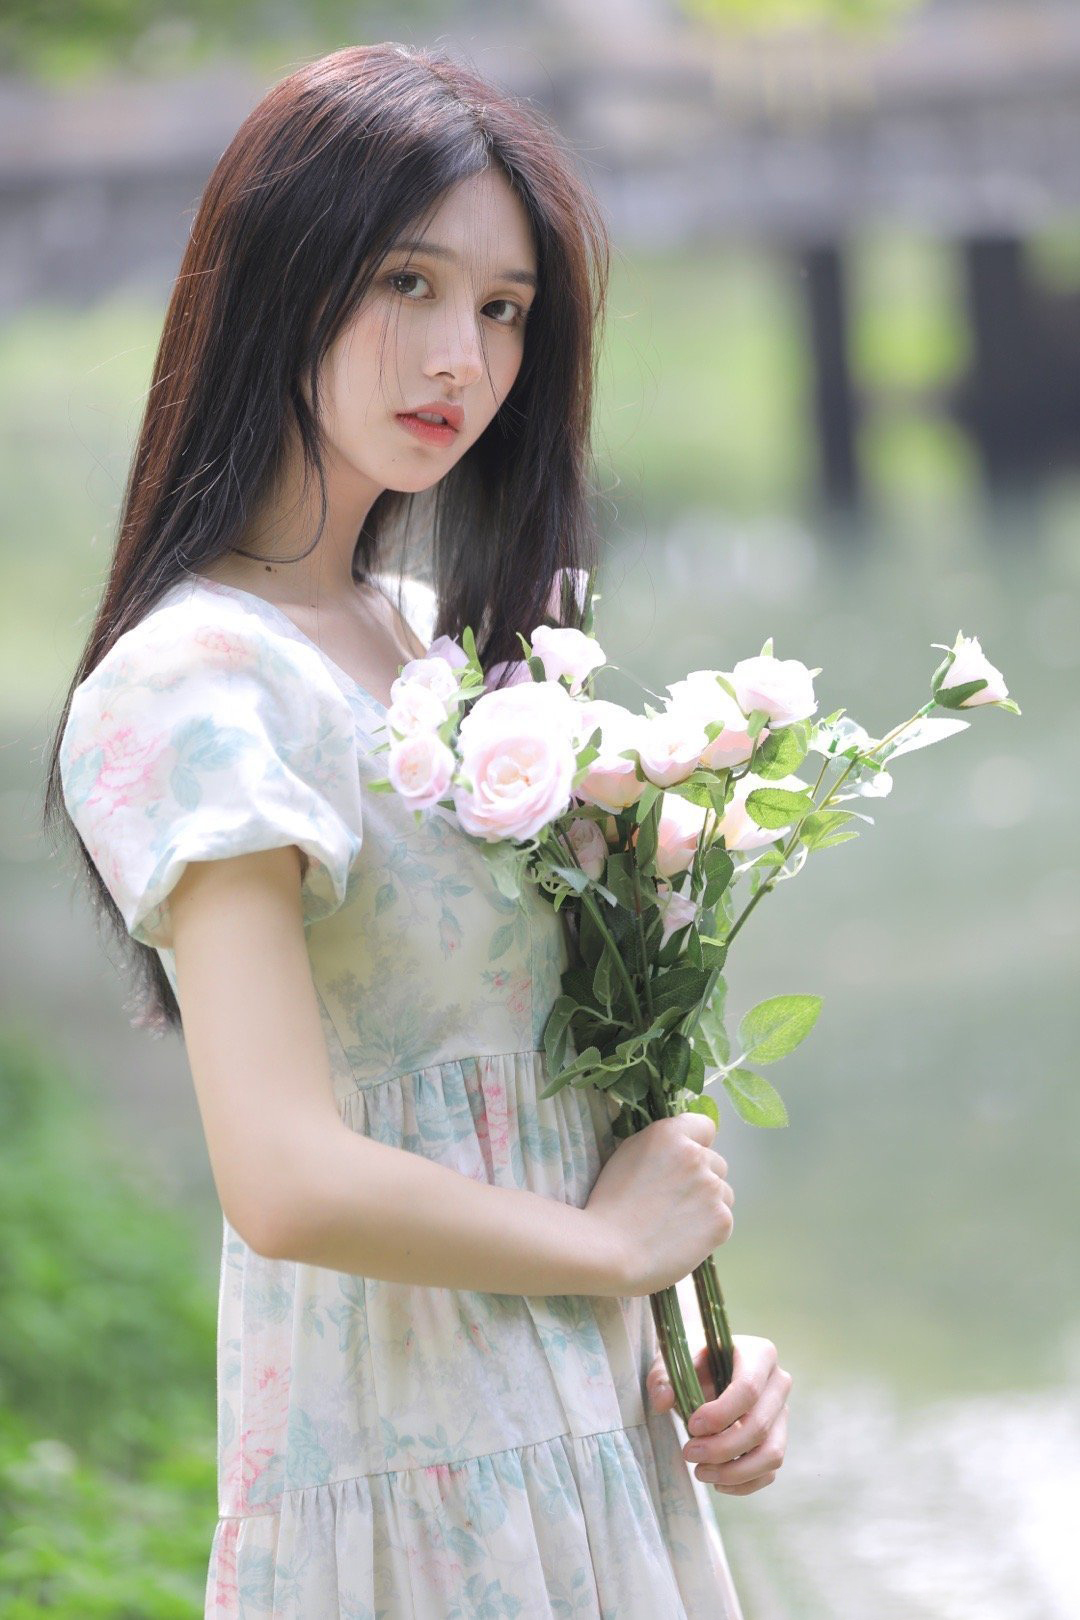 Flower Dress Women Model Asian 1080x1620